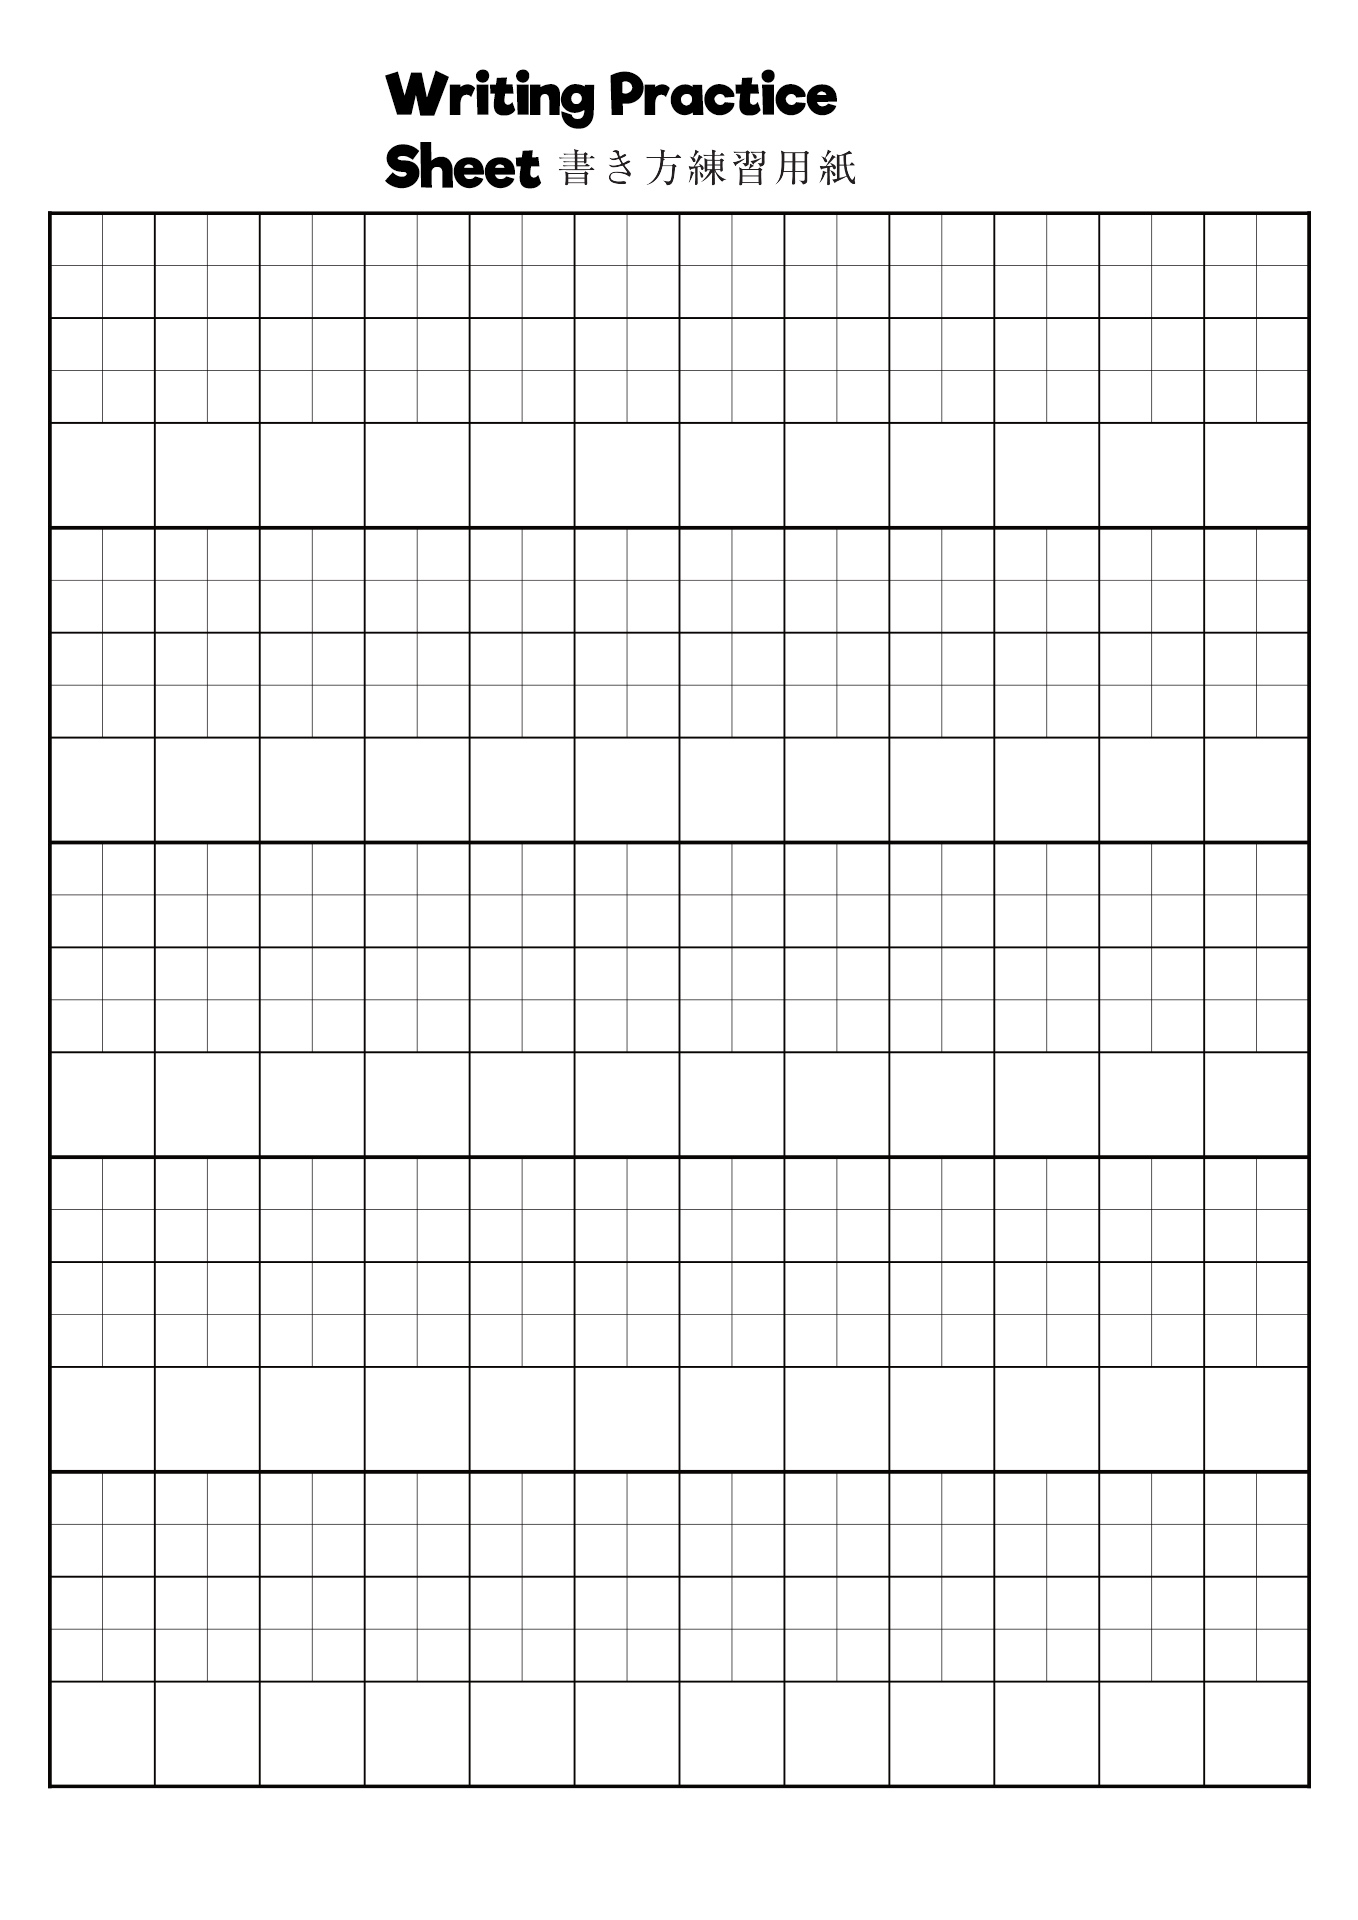 Japanese Writing Practice Sheets Blank Image